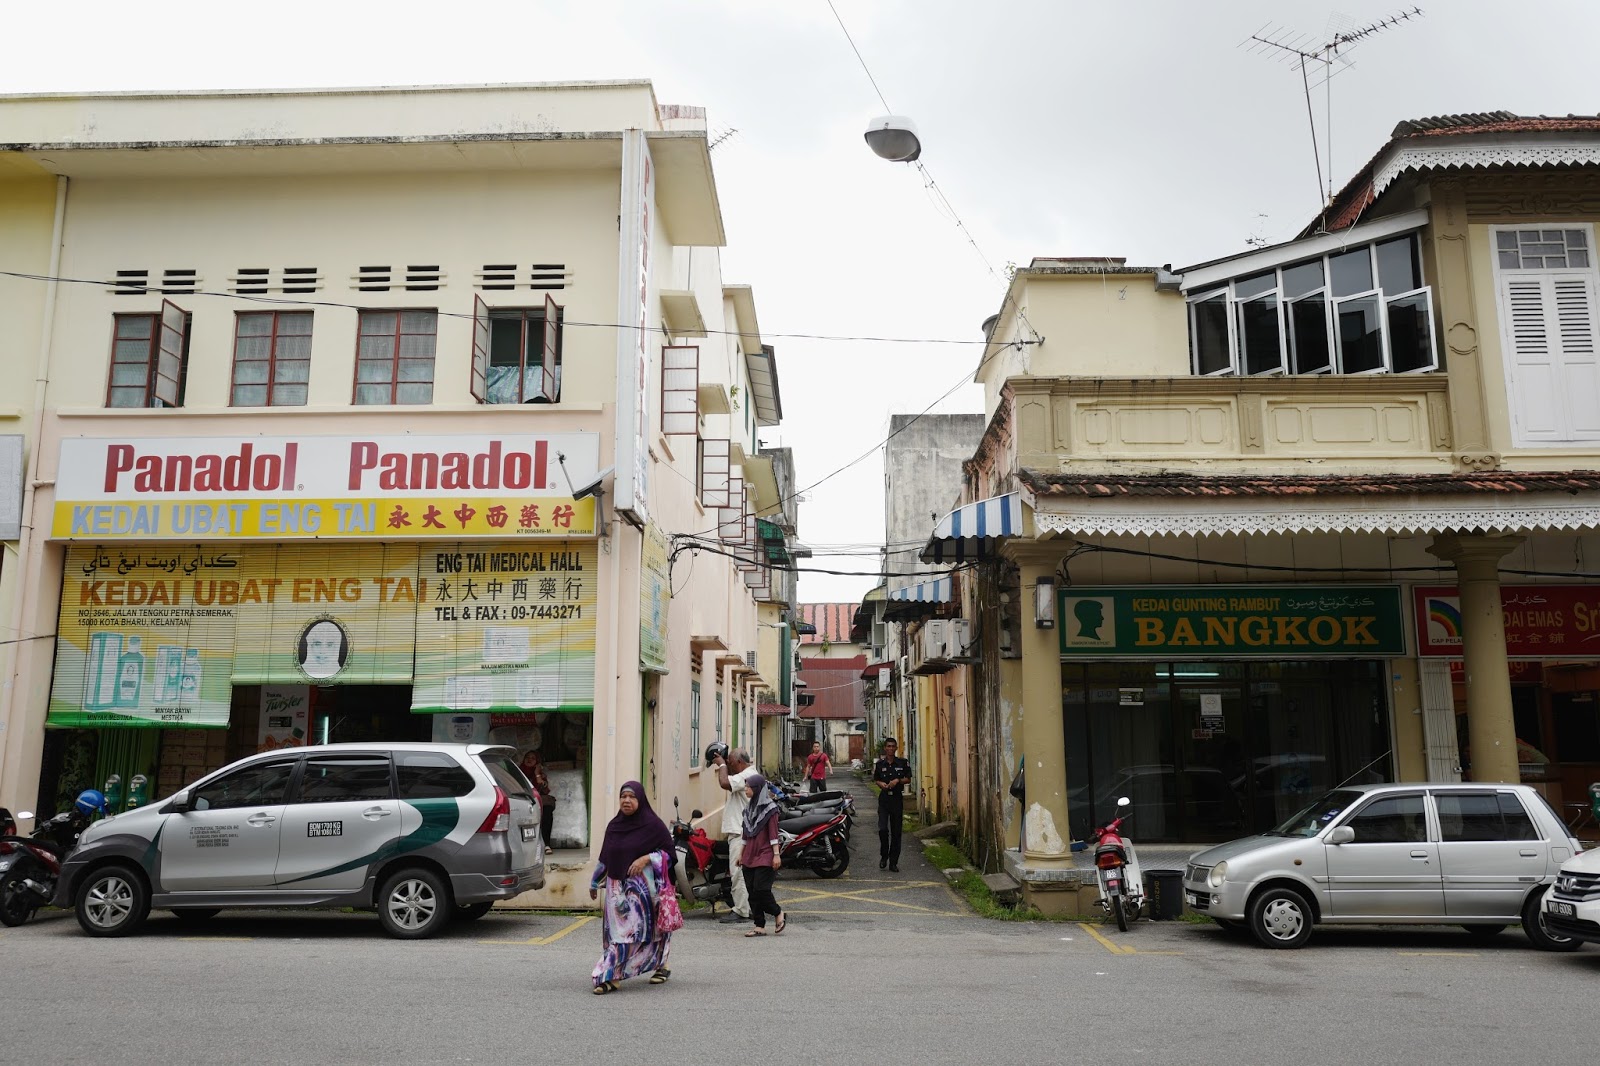 JE TunNel: Kota Bharu Town, Kelantan~ The Islamic City, Malaysia!